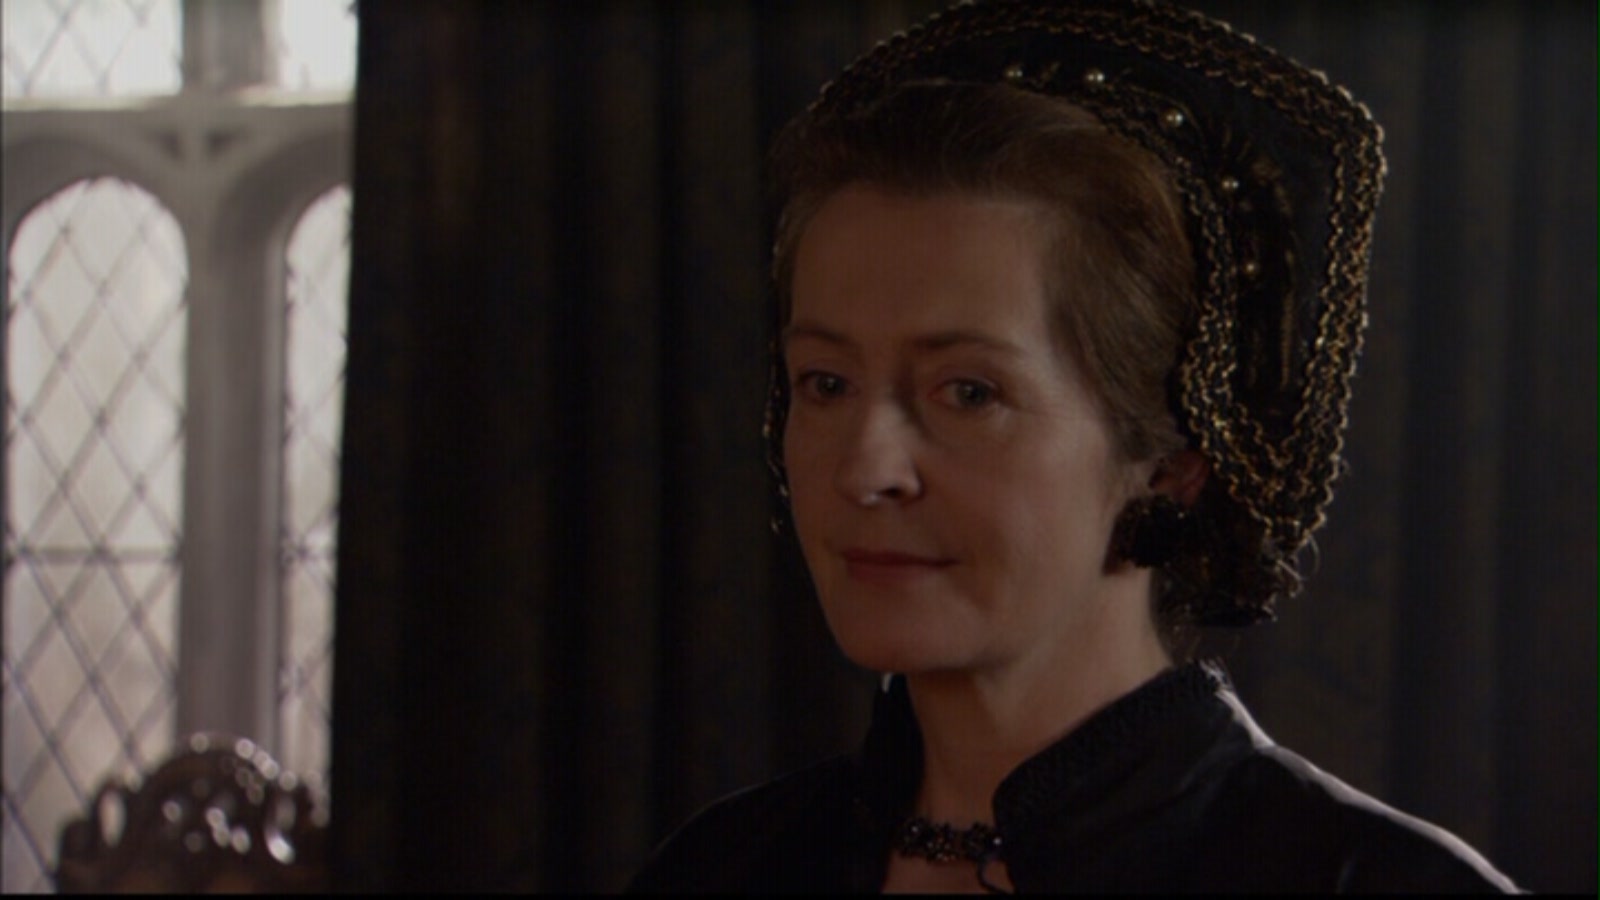 lady Margaret Bryan photogallery - The Tudors Wiki